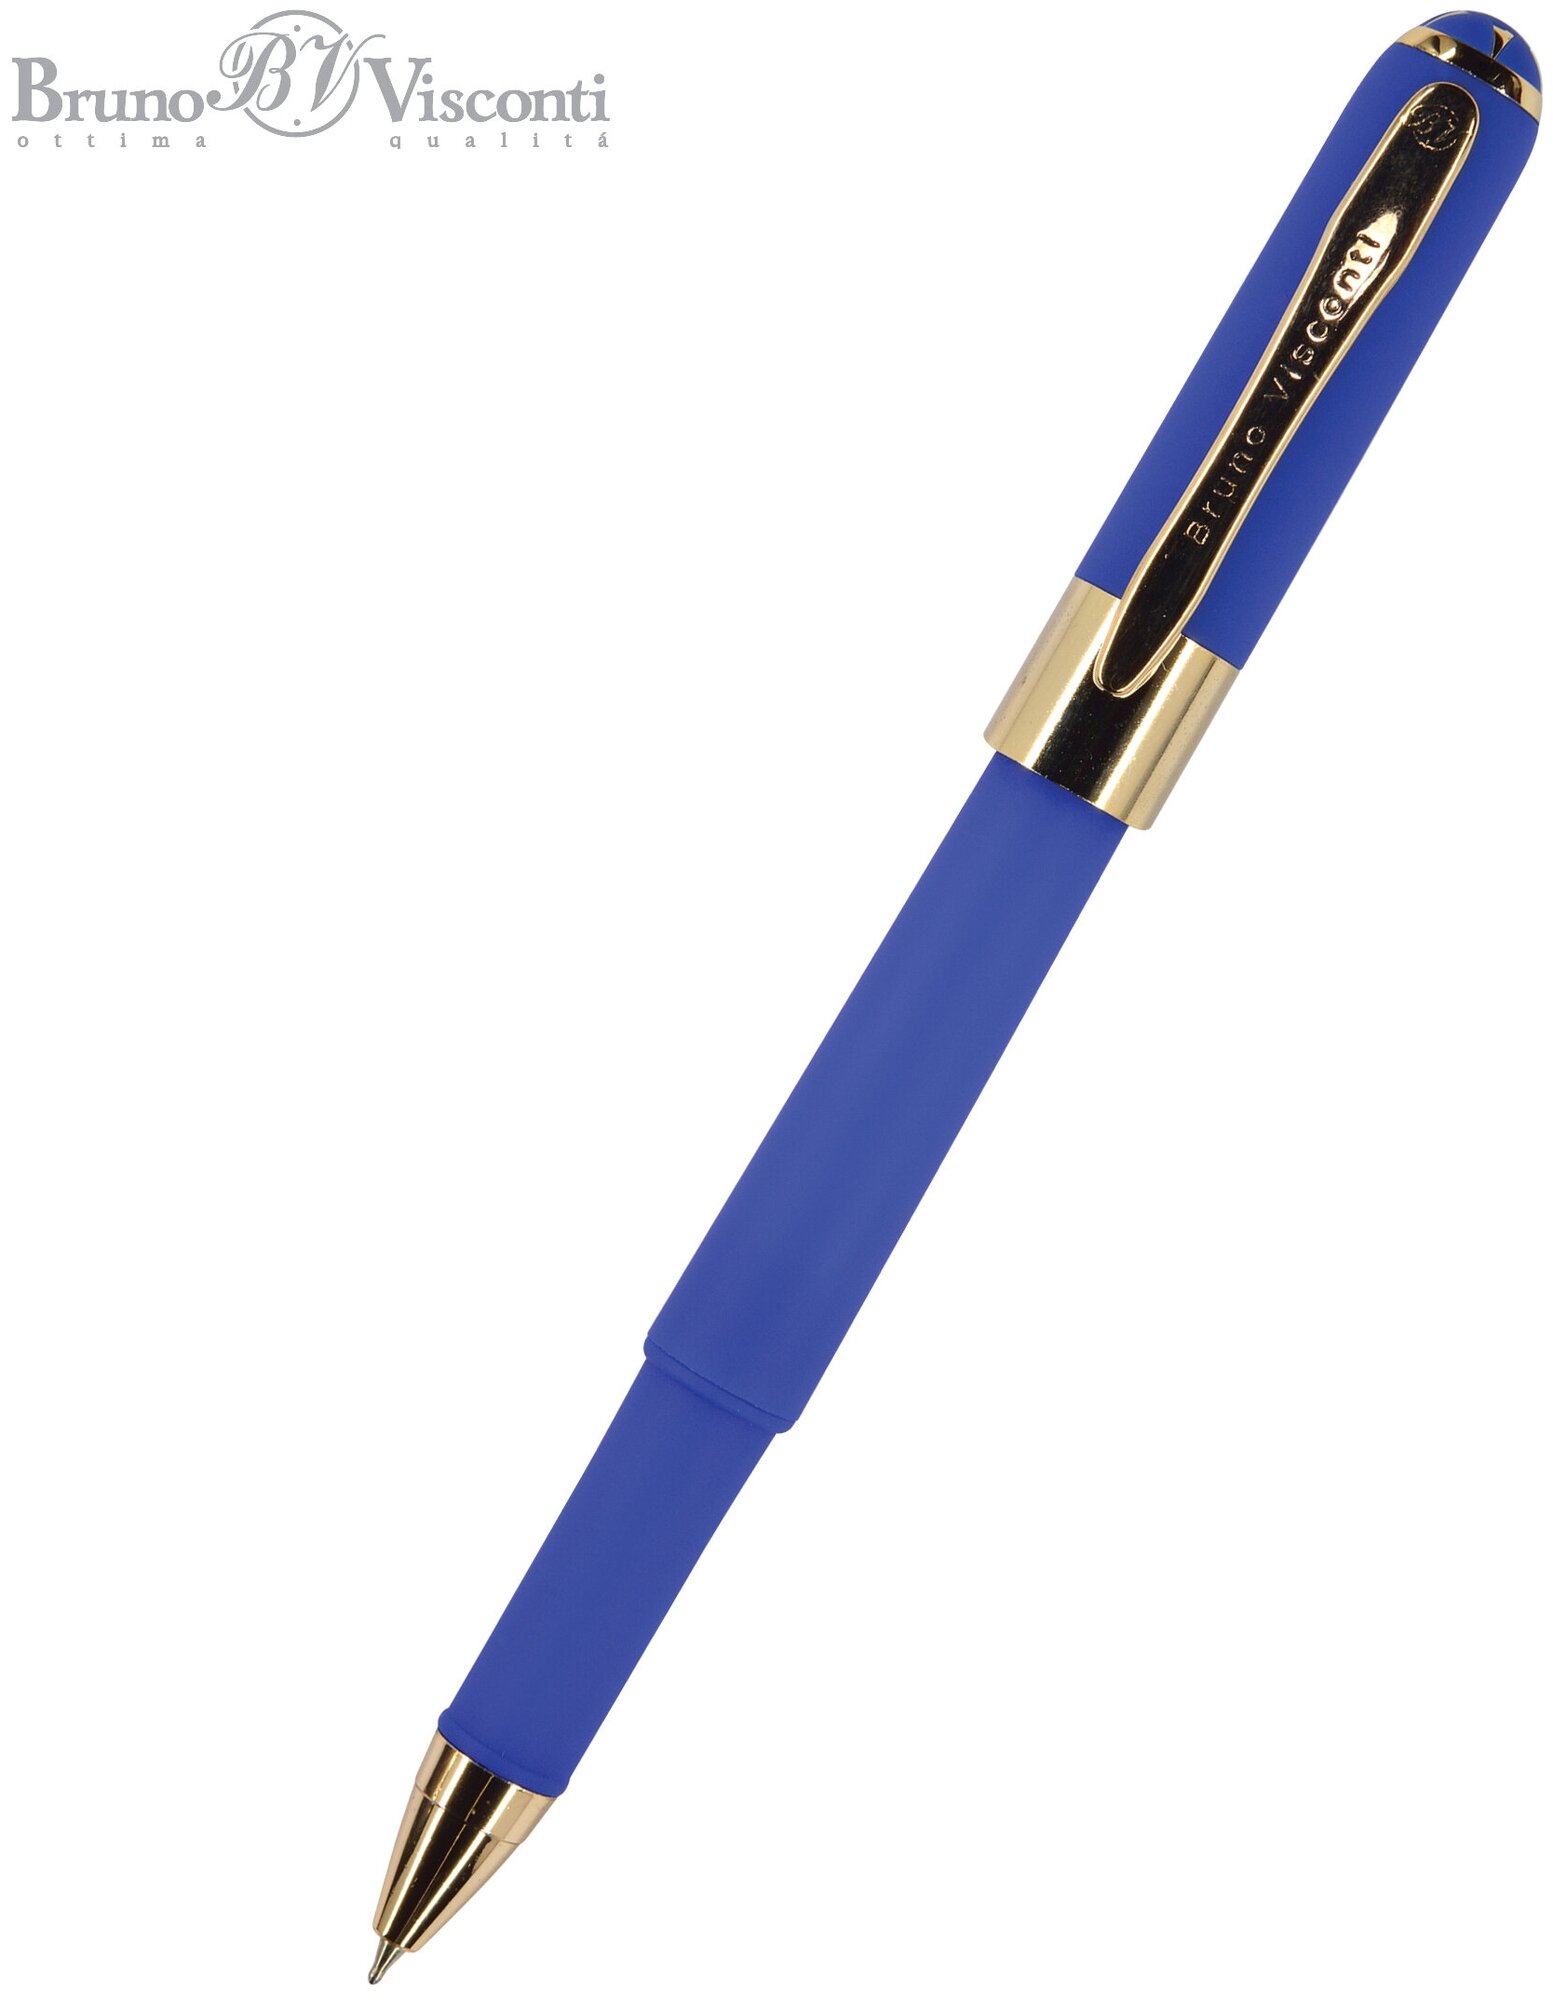 Ручка шариковая BrunoVisconti, 0,5 мм, синяя, Monaco (синий корпус), Арт. 20-0125/08